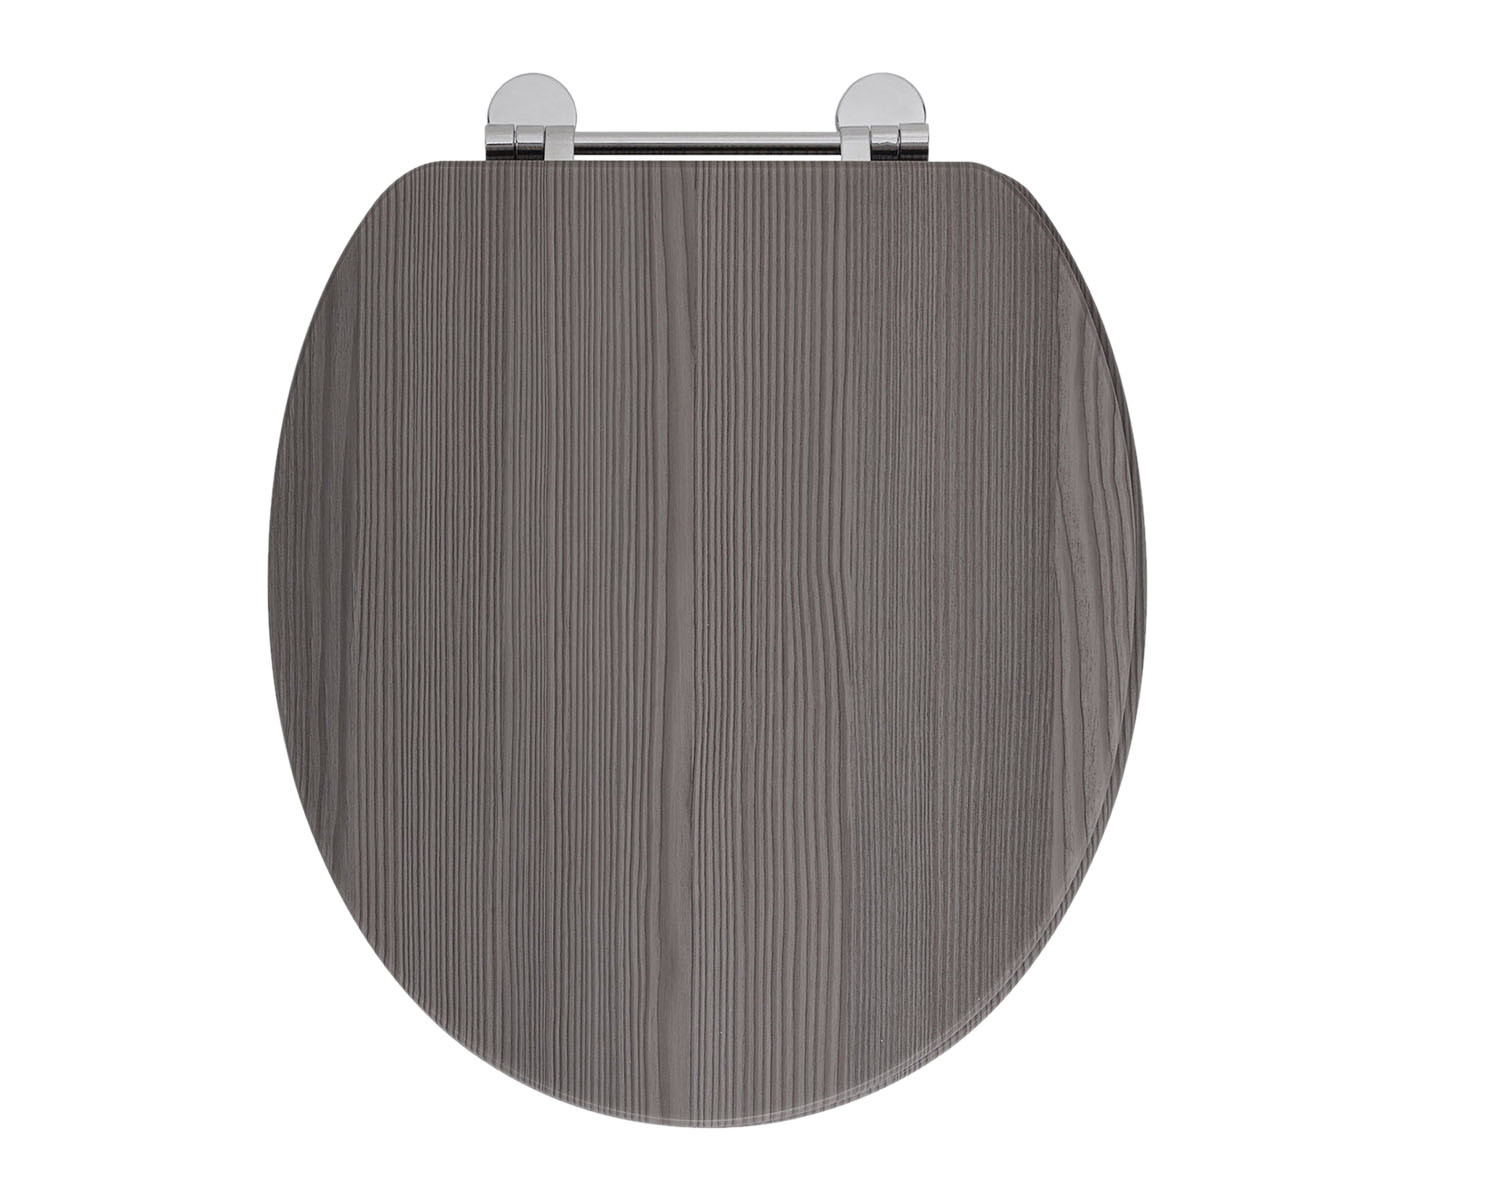 Wooden Soft-Close Toilet Seat - Avola Grey | FrontlineBathrooms.com